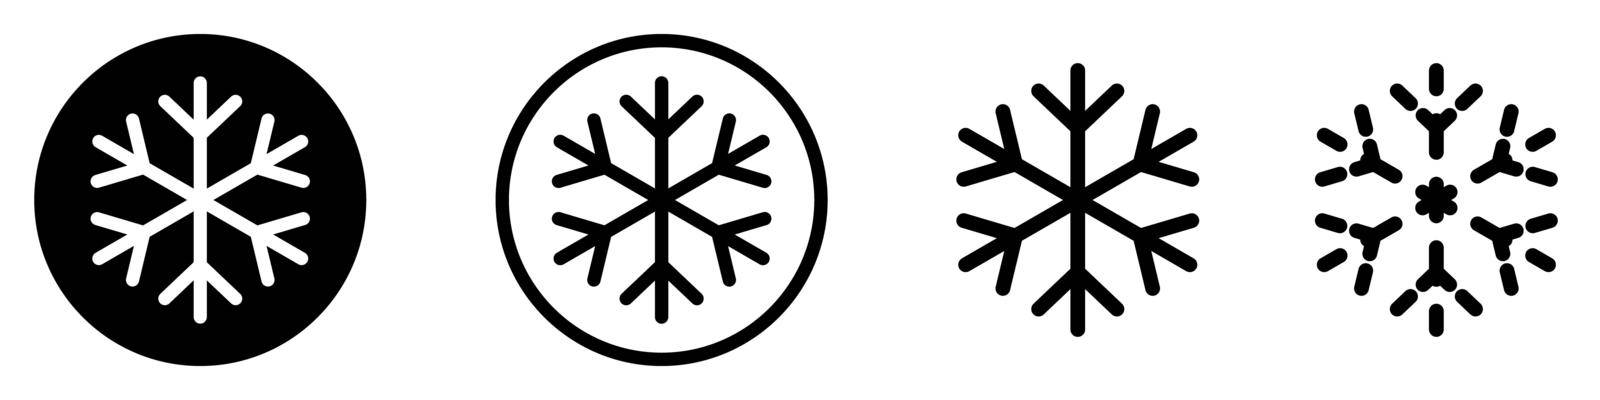 Snowflake icon. Set of abstract snowflakes. Vector illustration. Black snowflake icon isolated